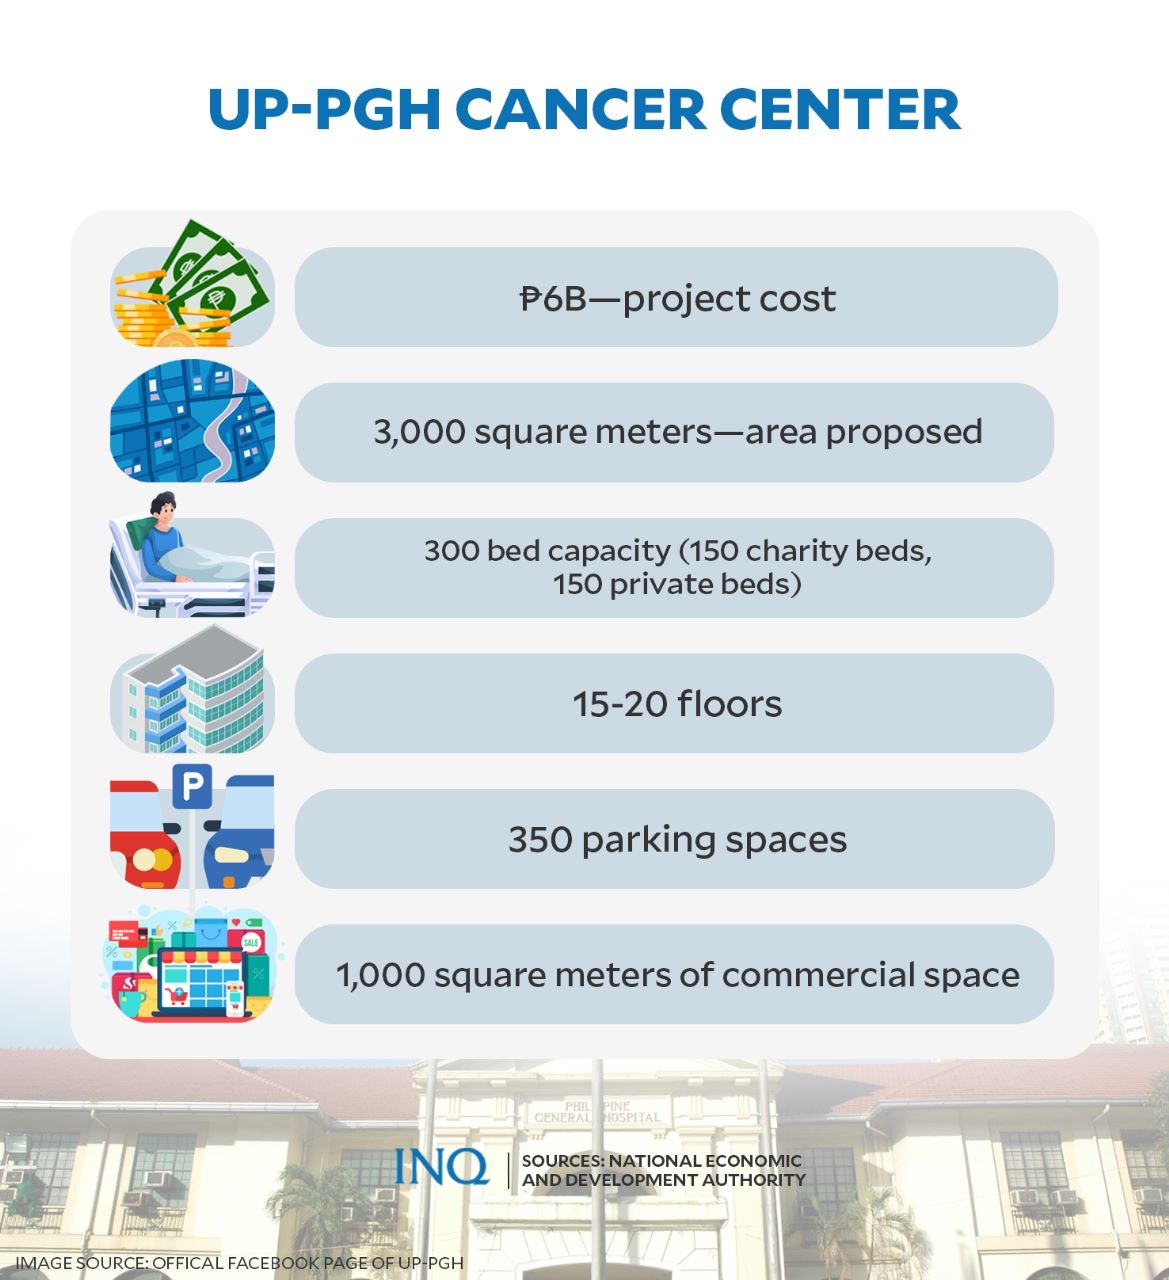 UP-PGH Cancer Center